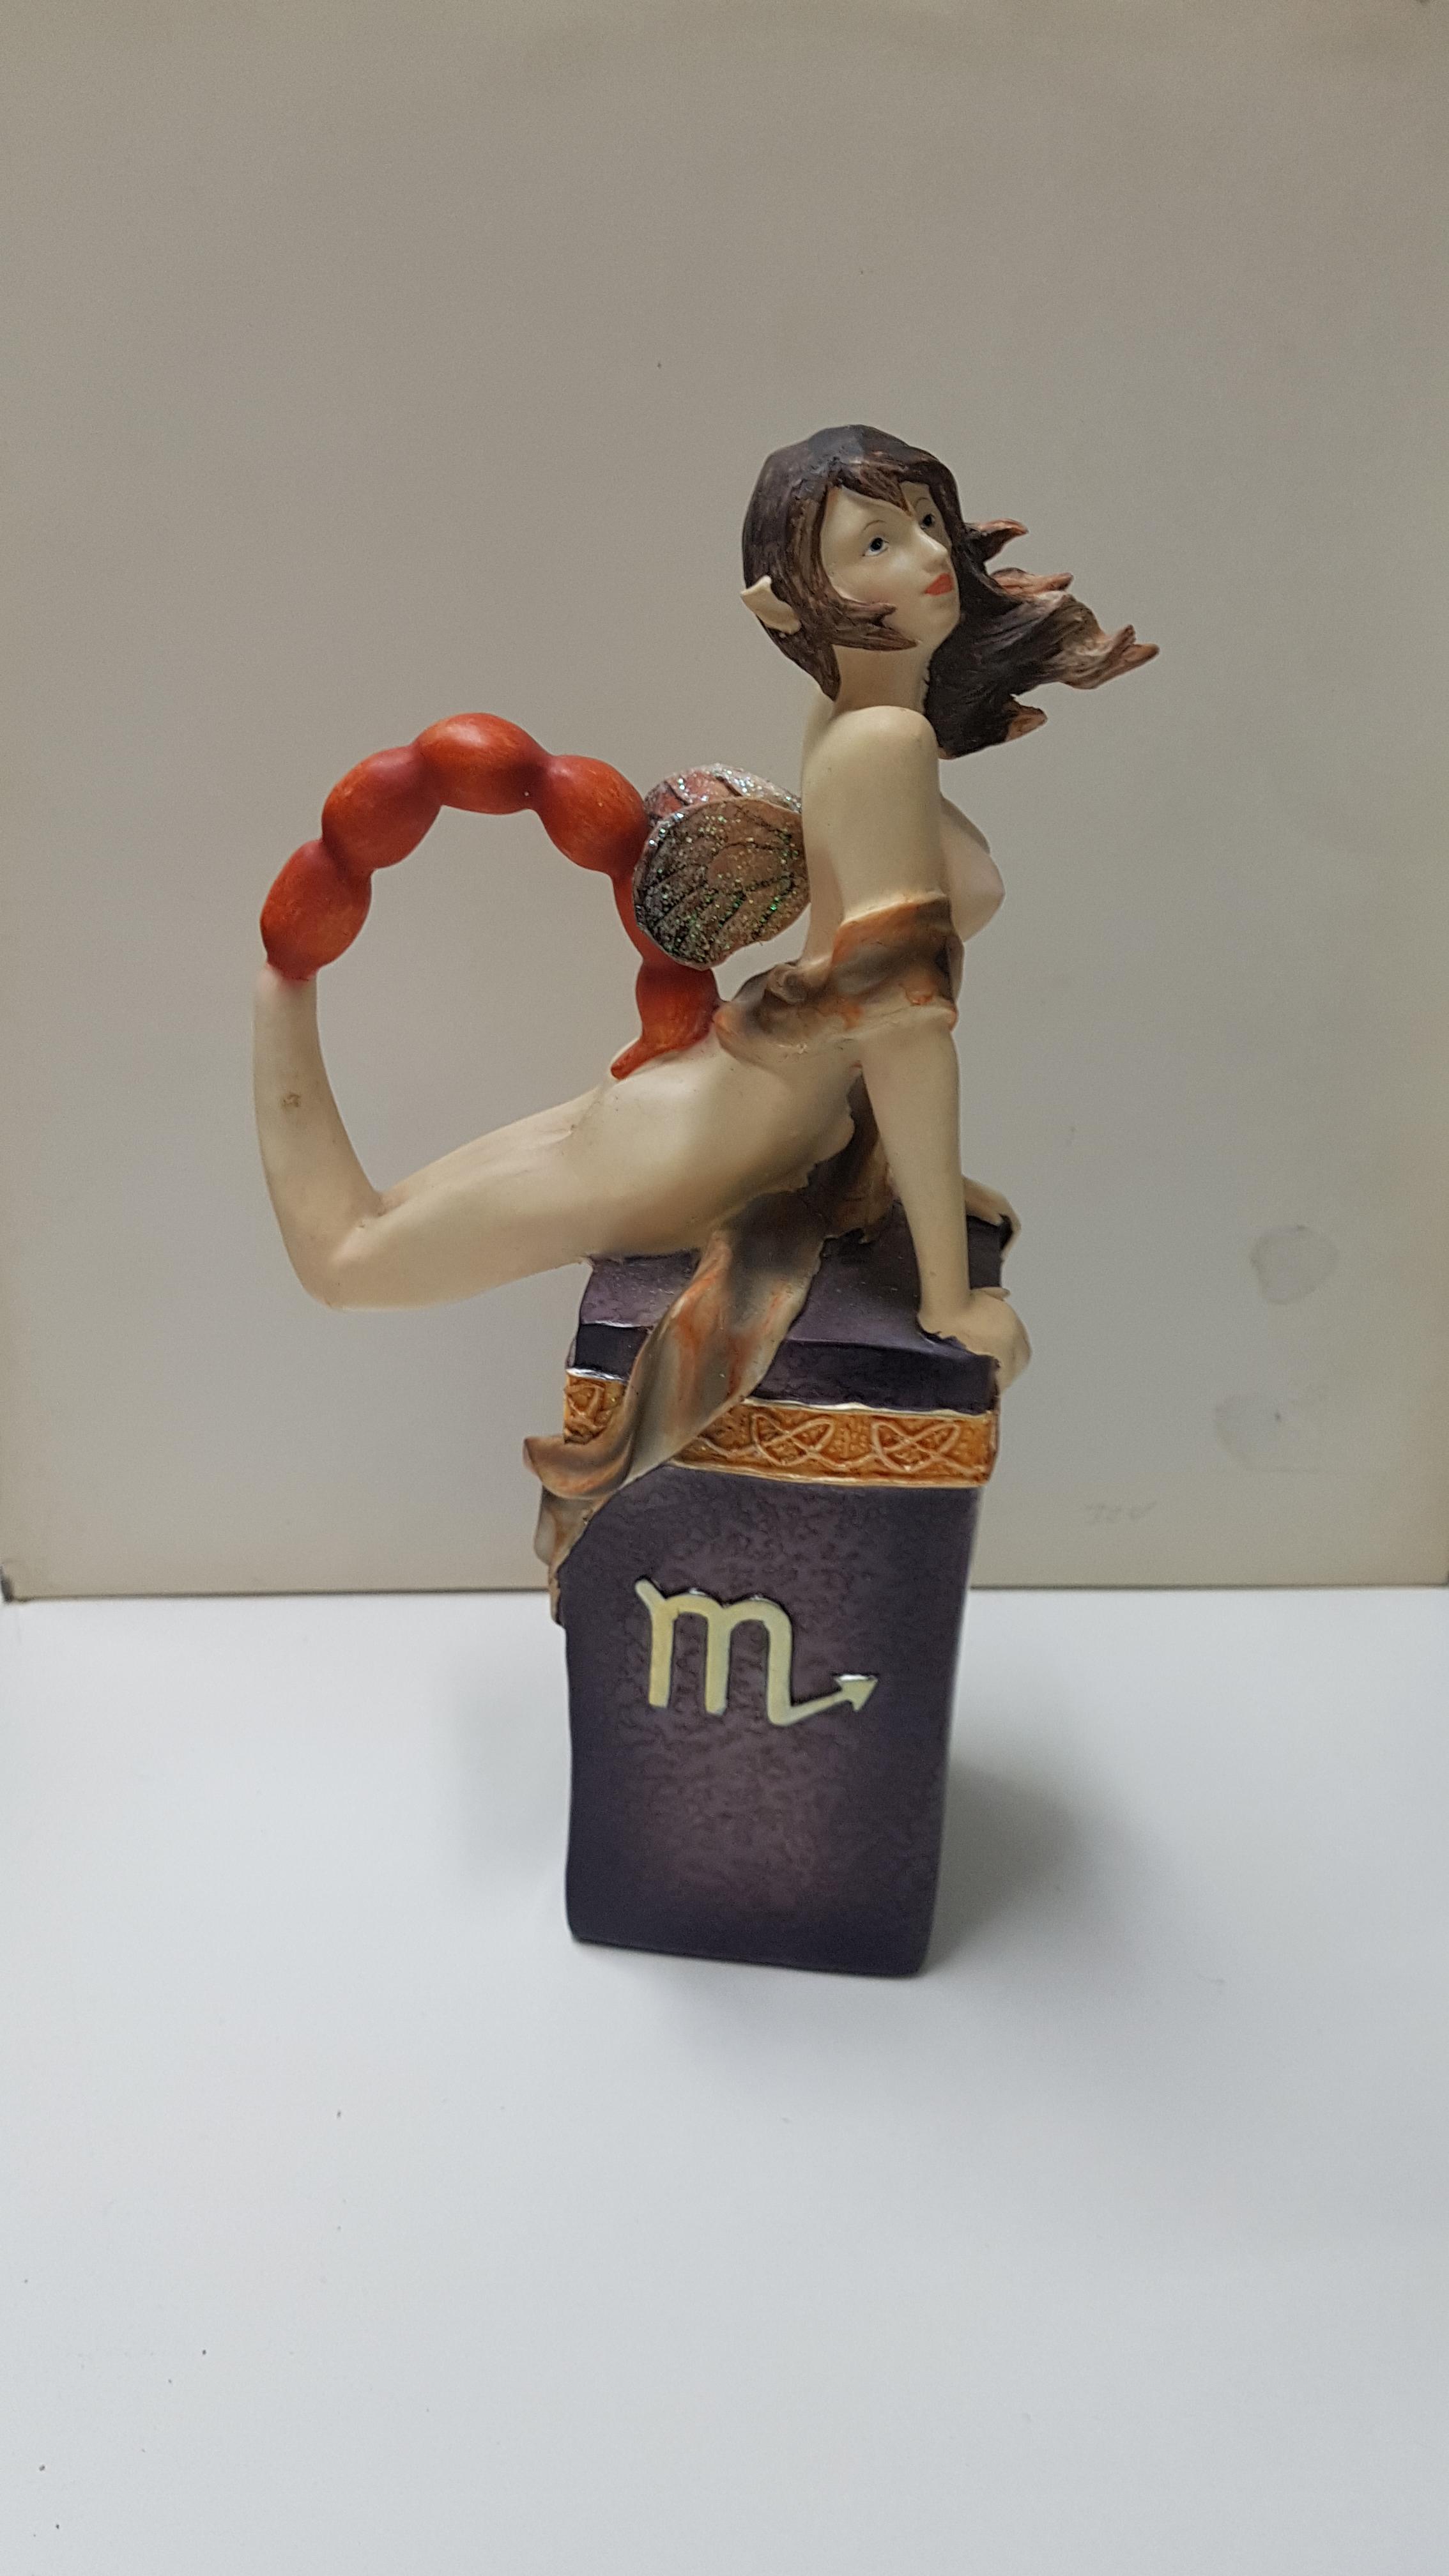 Figura de fantasia: Hada con cola de escorpion sobre un pedestal